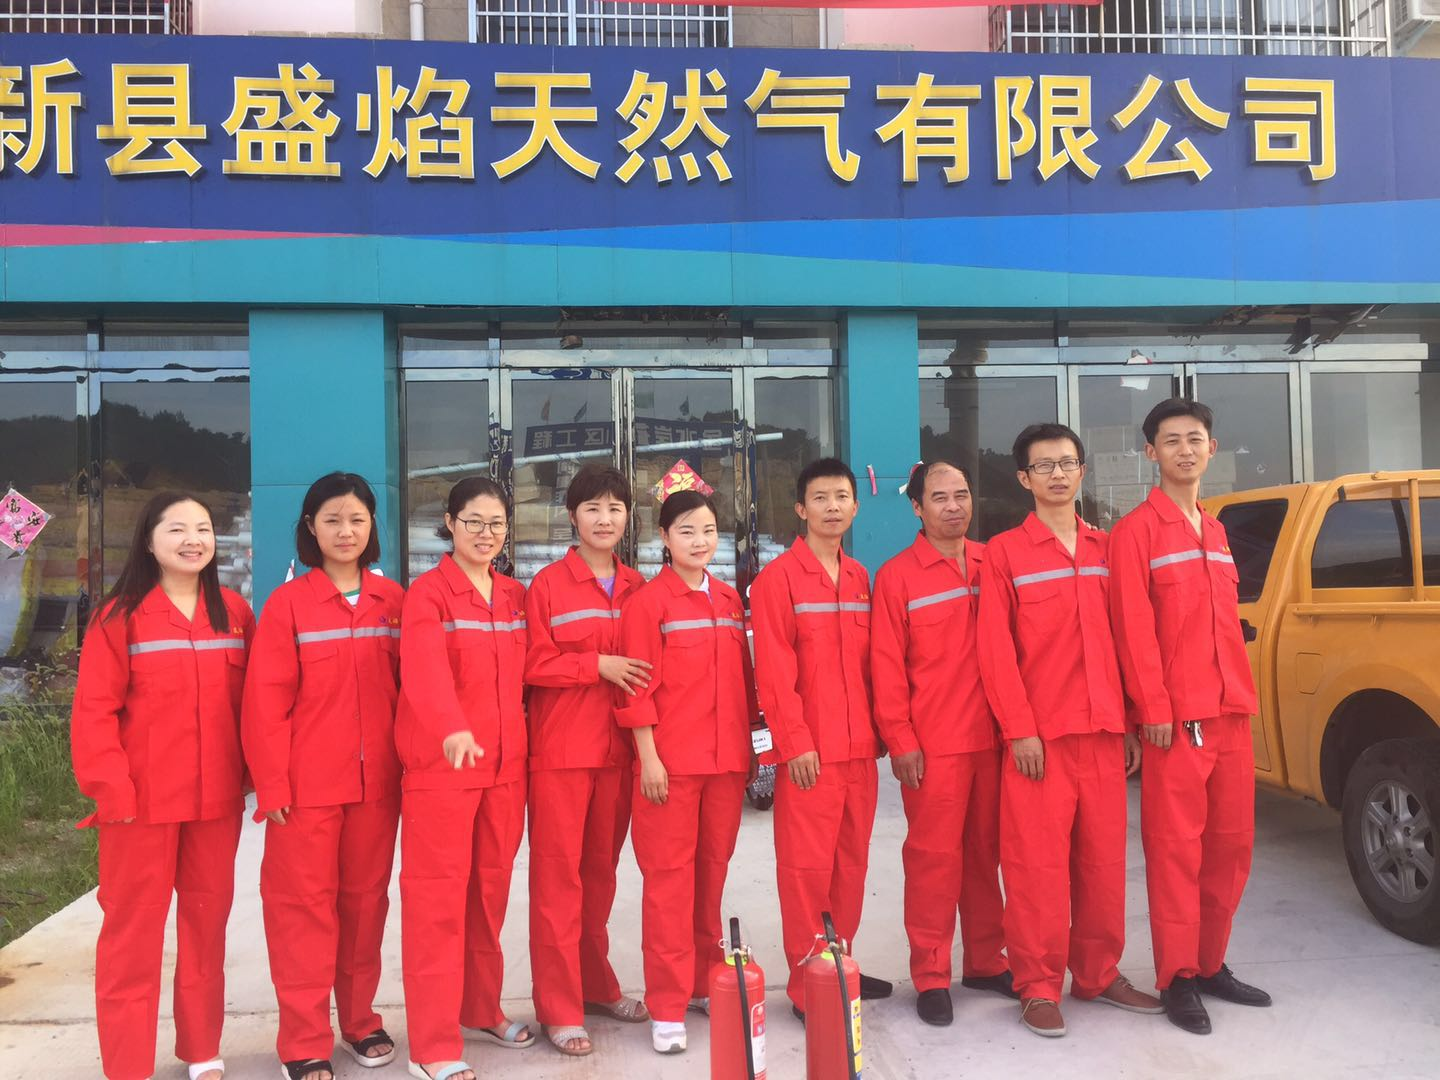 Xinxian branch organized fire safety training drill